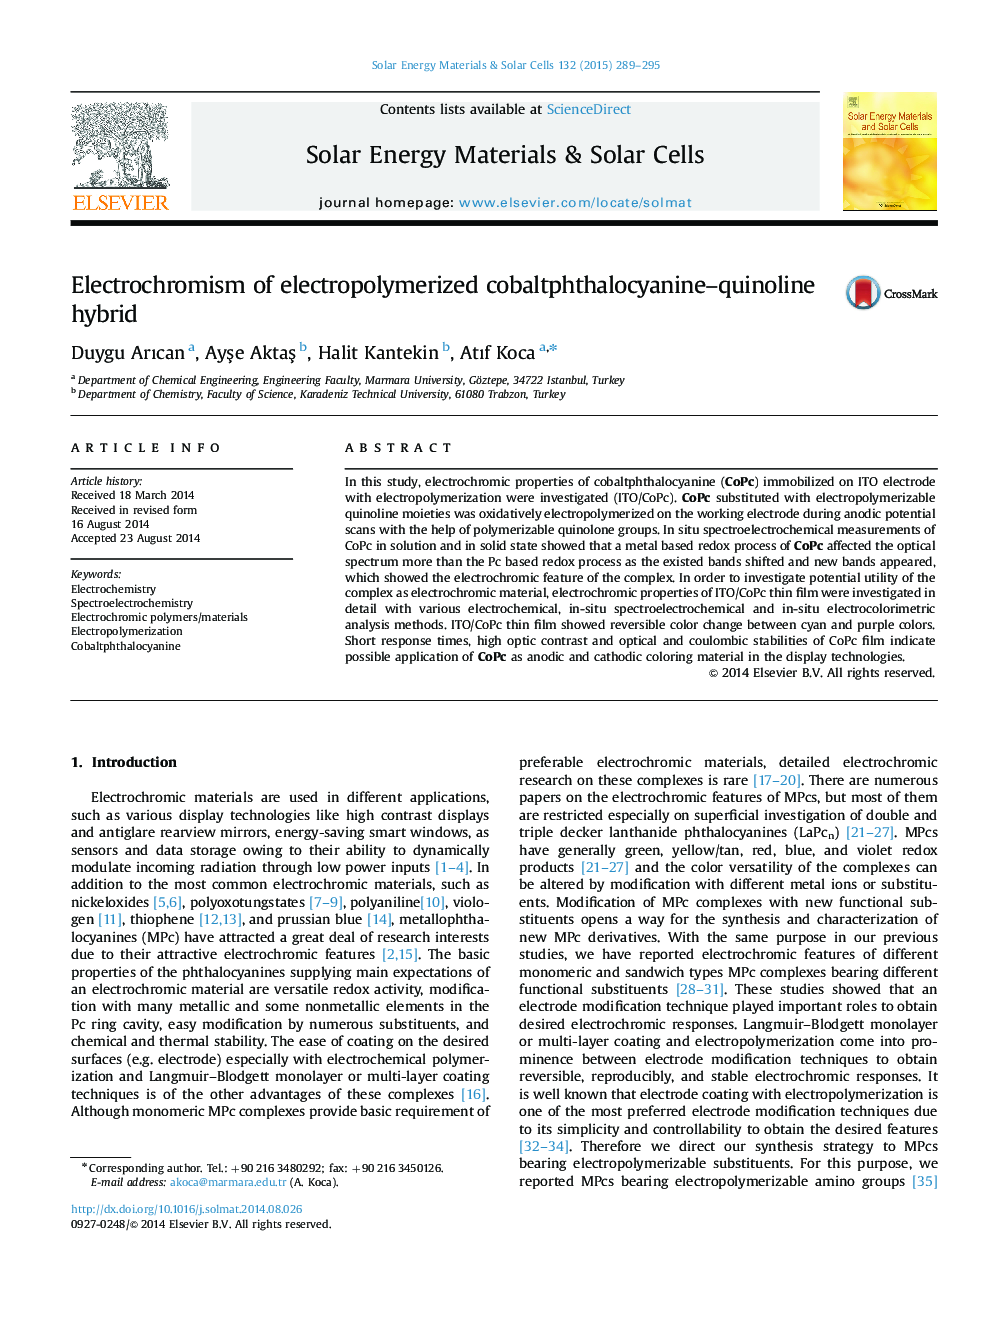 Electrochromism of electropolymerized cobaltphthalocyanine-quinoline hybrid